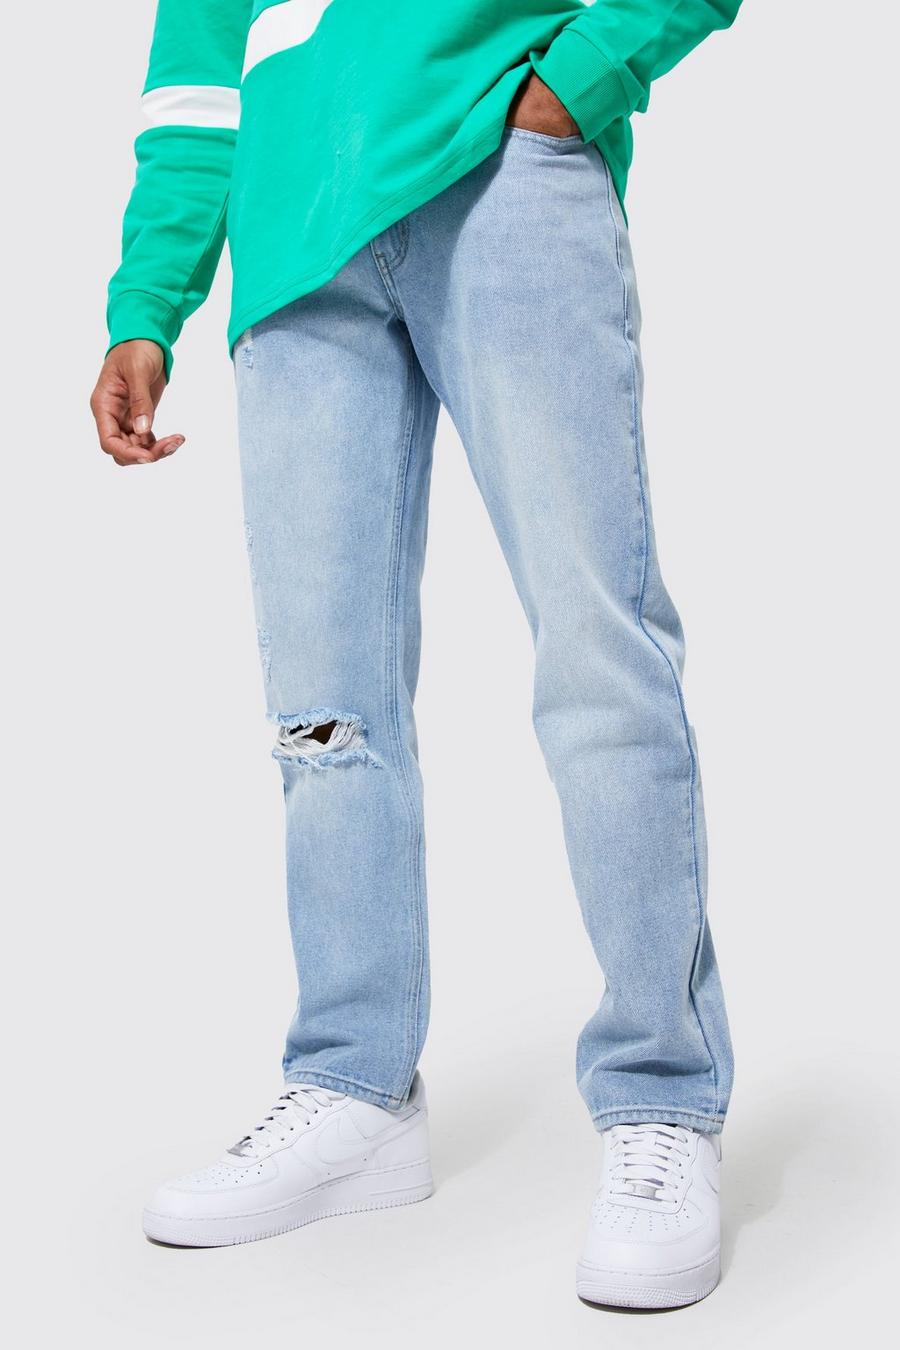 Light blue azzurro ג'ינס בגזרה ישרה עם קרעים בברך